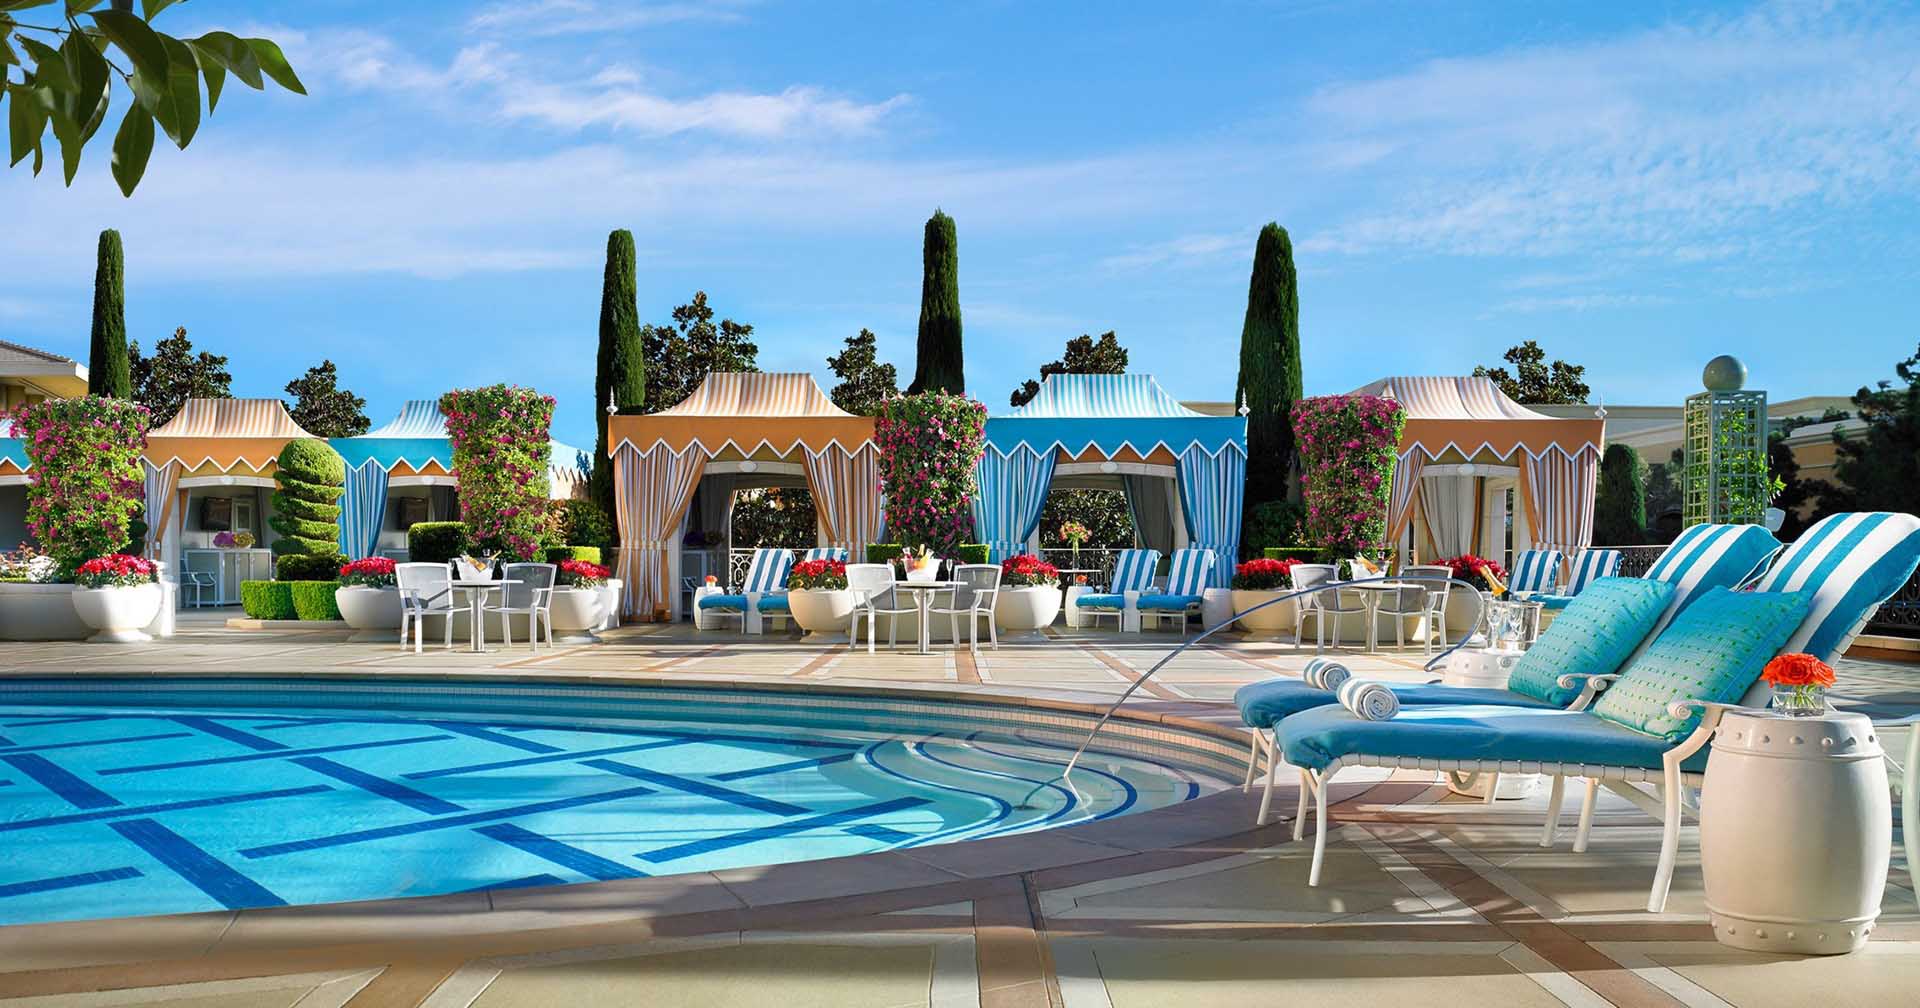 Wynn pool Las Vegas hotels